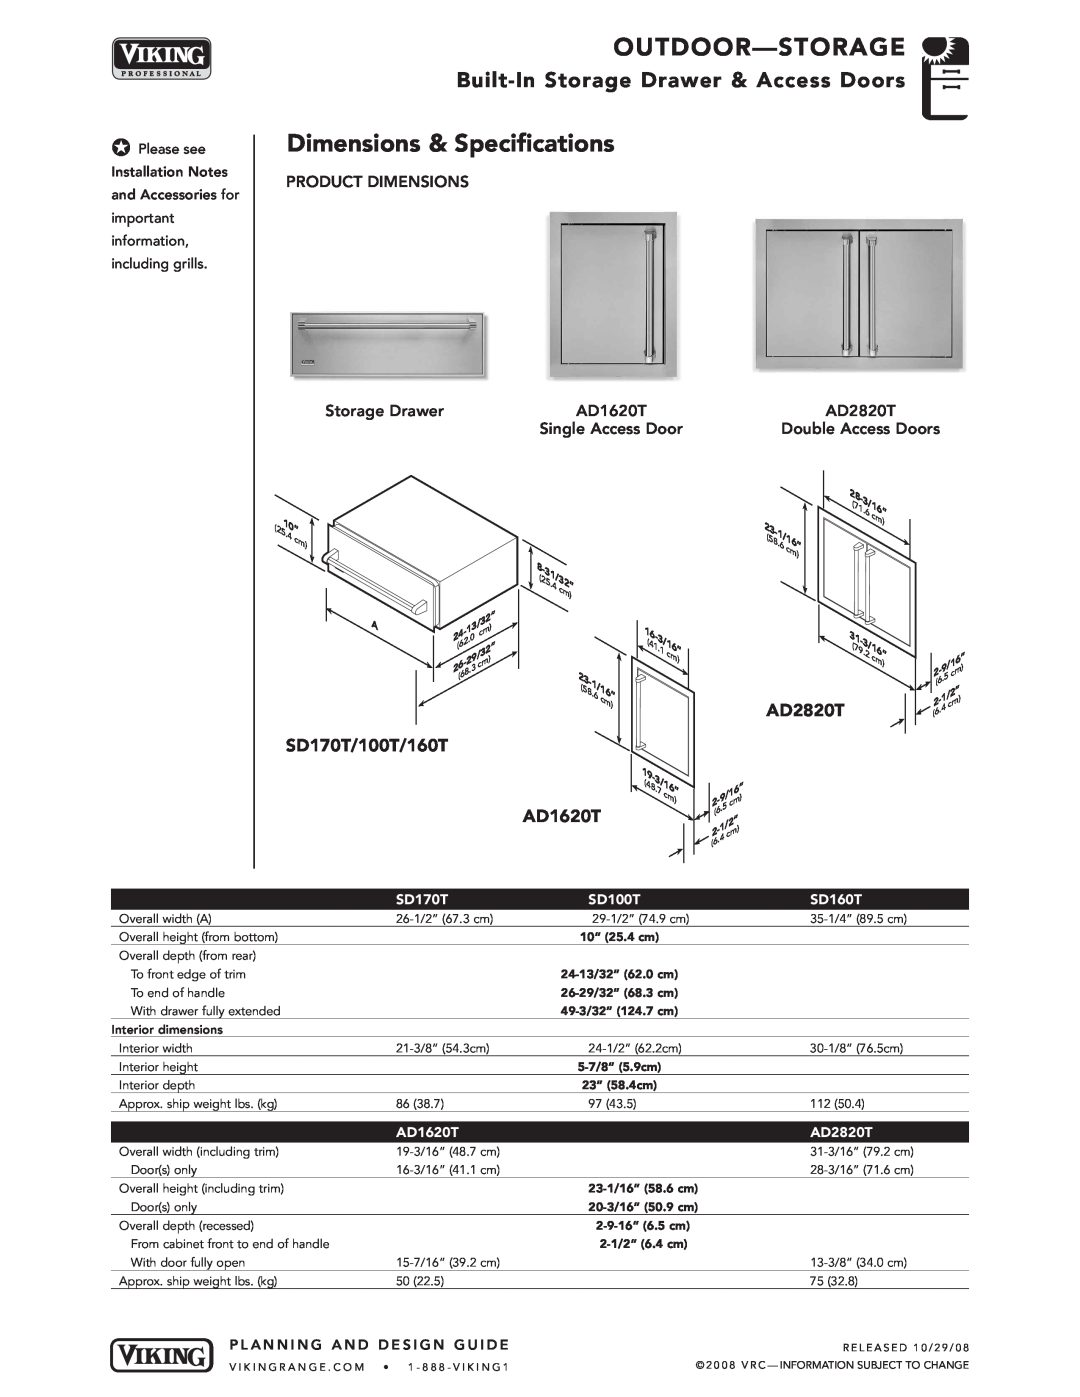 Viking Storage Drawer Dimensions & Specifications, SD170T/100T/160T, AD1620T, AD2820T, Product Dimensions, SD100T, SD160T 